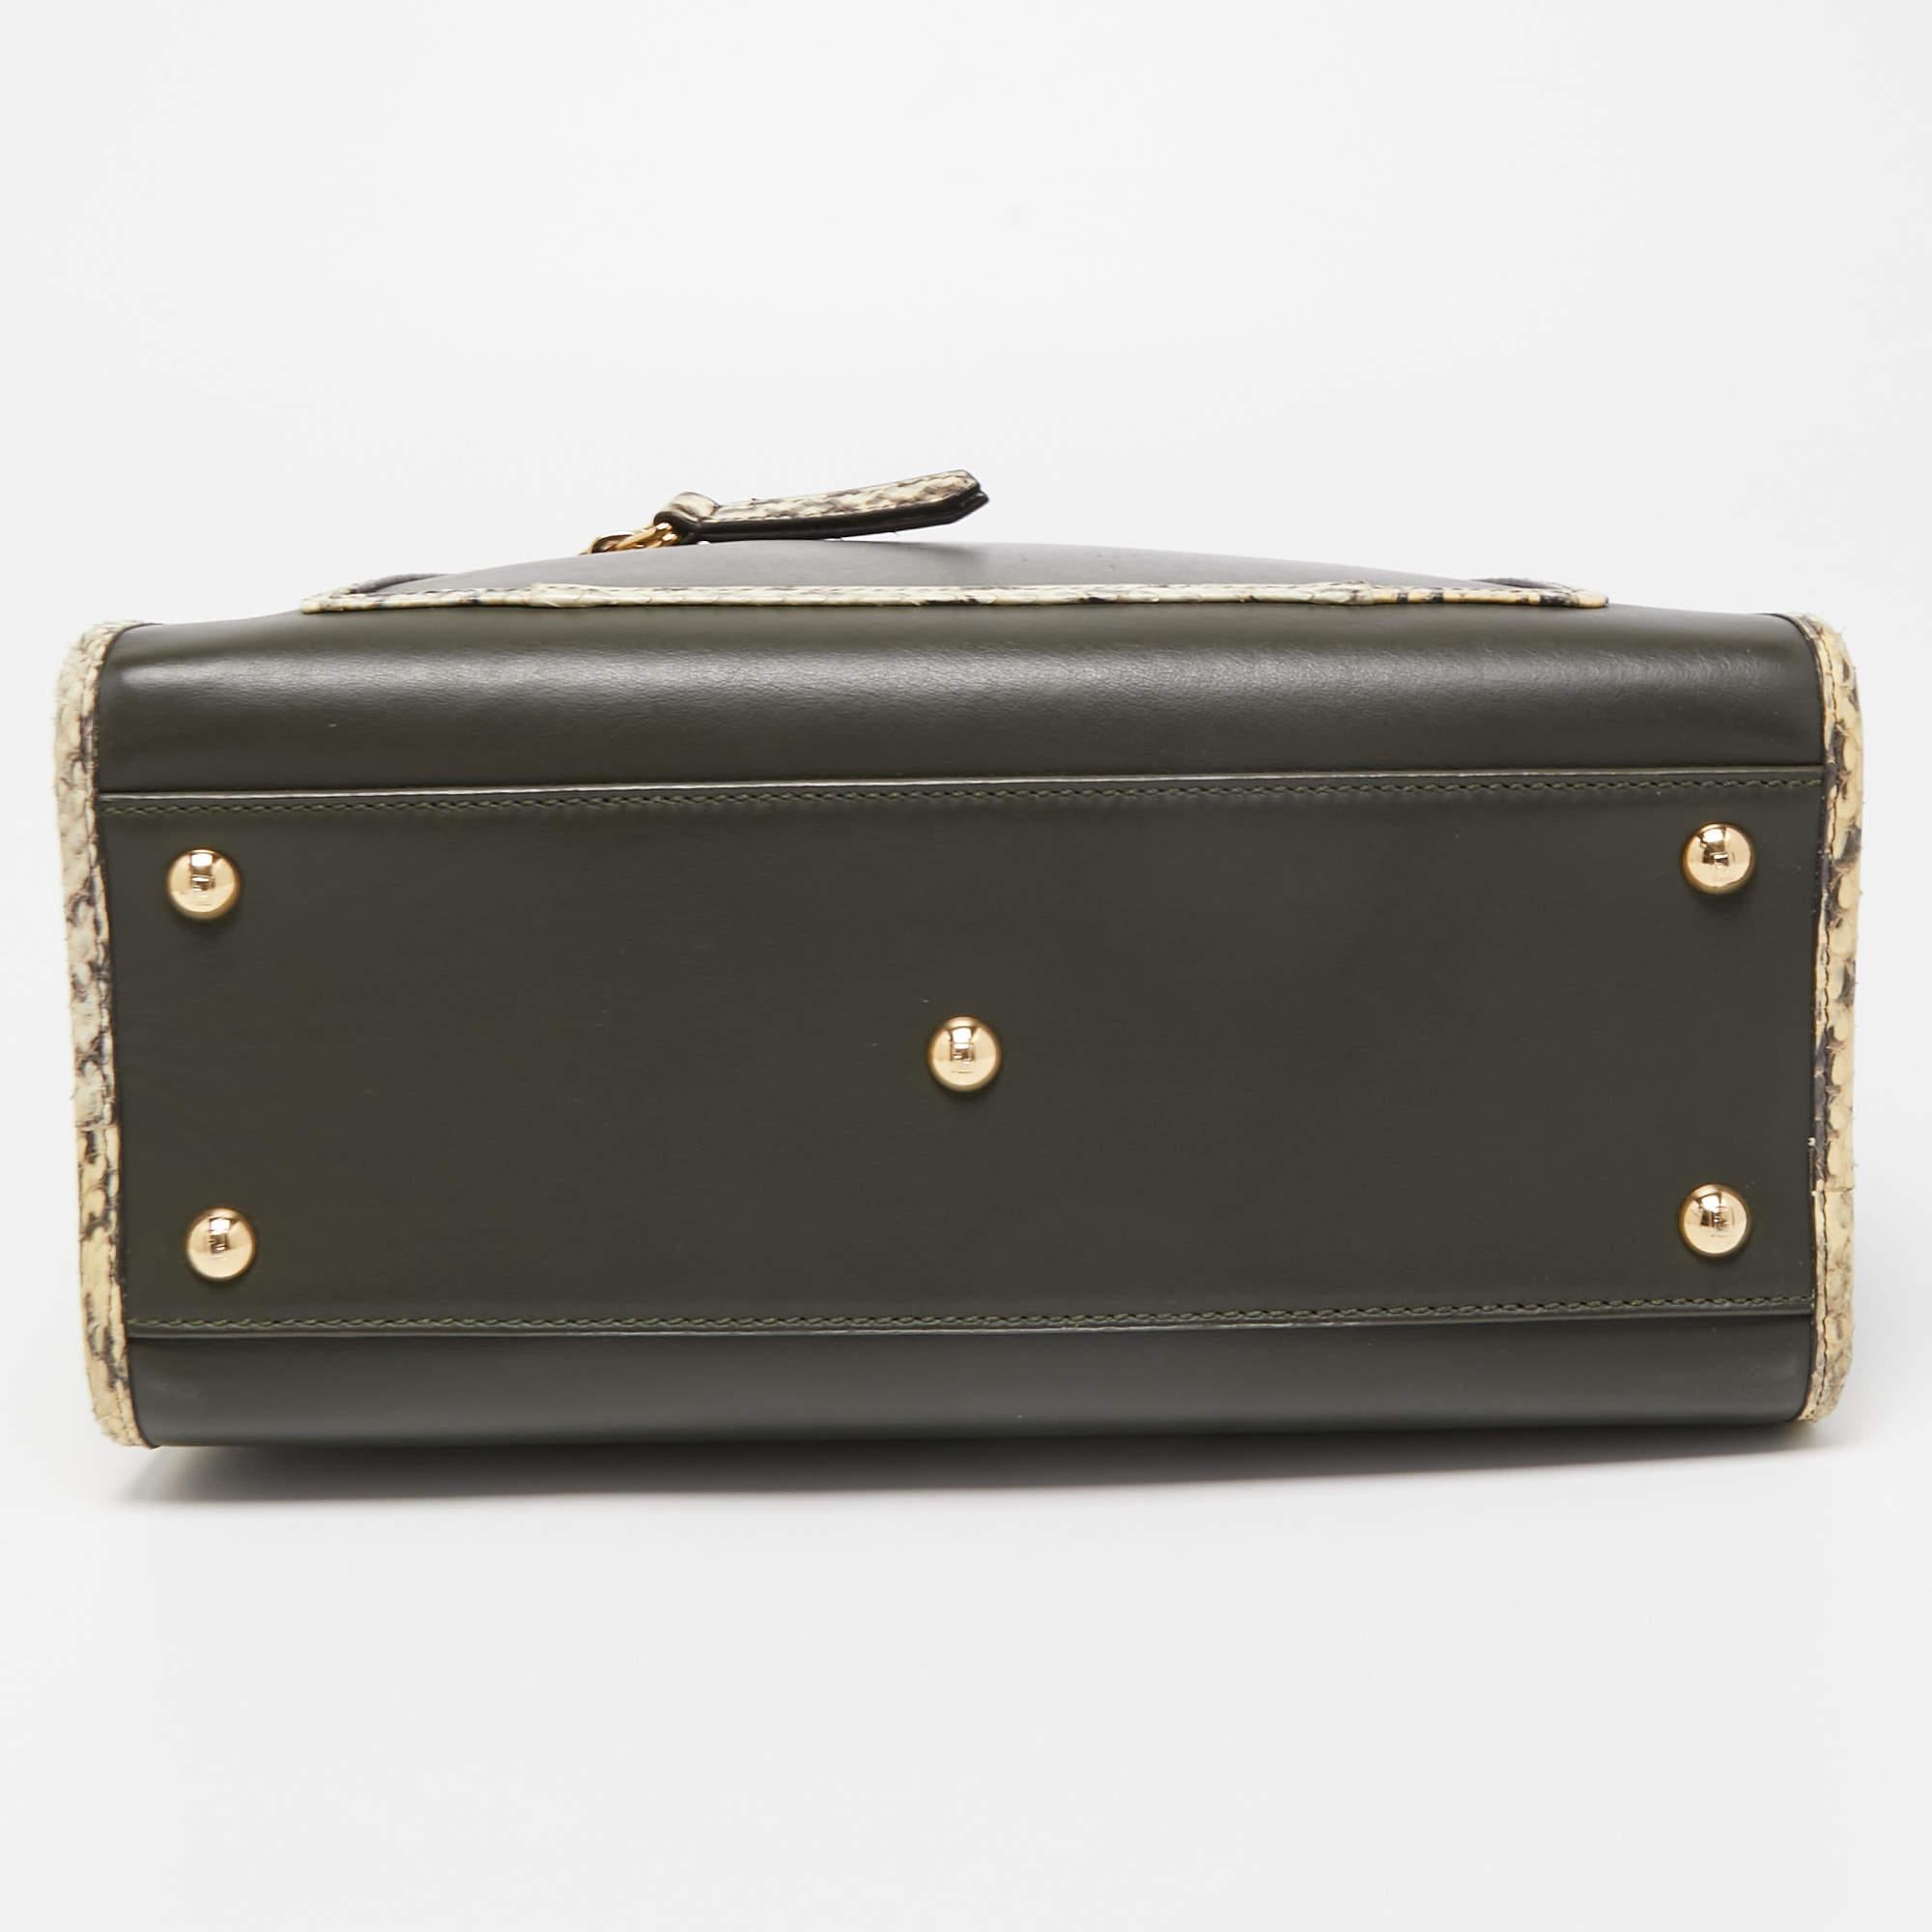 Fendi Green/Beige Leather and Watersnake Trim Small Runaway Top Handle Bag 7